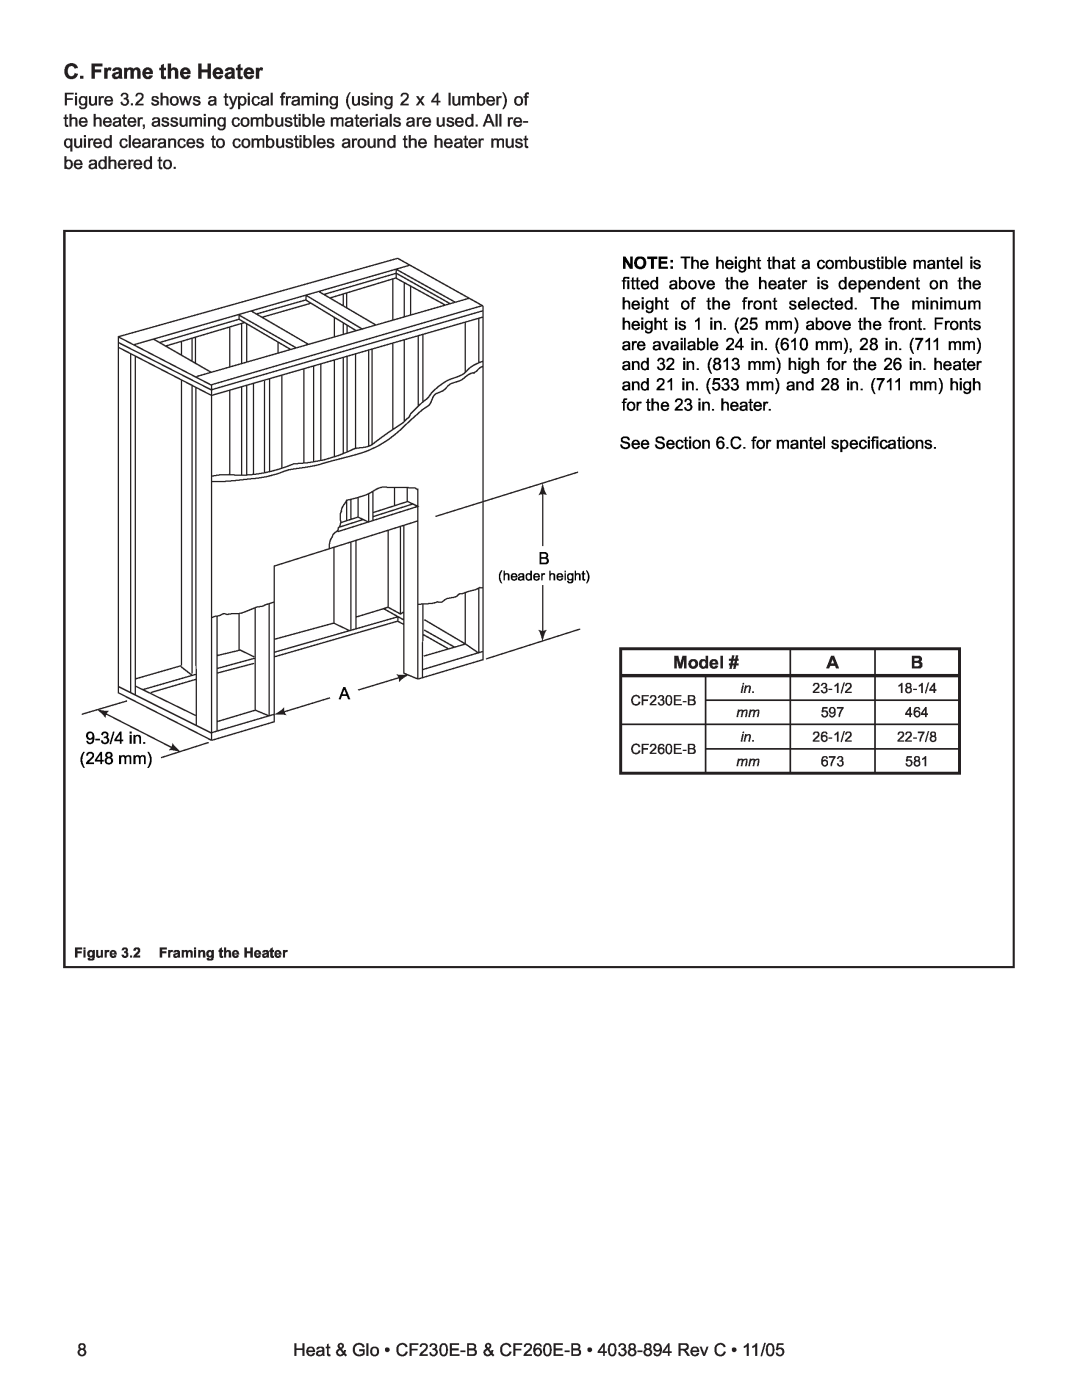 Heat & Glo LifeStyle CF230E-B, CF260E-B owner manual C. Frame the Heater, Model # 